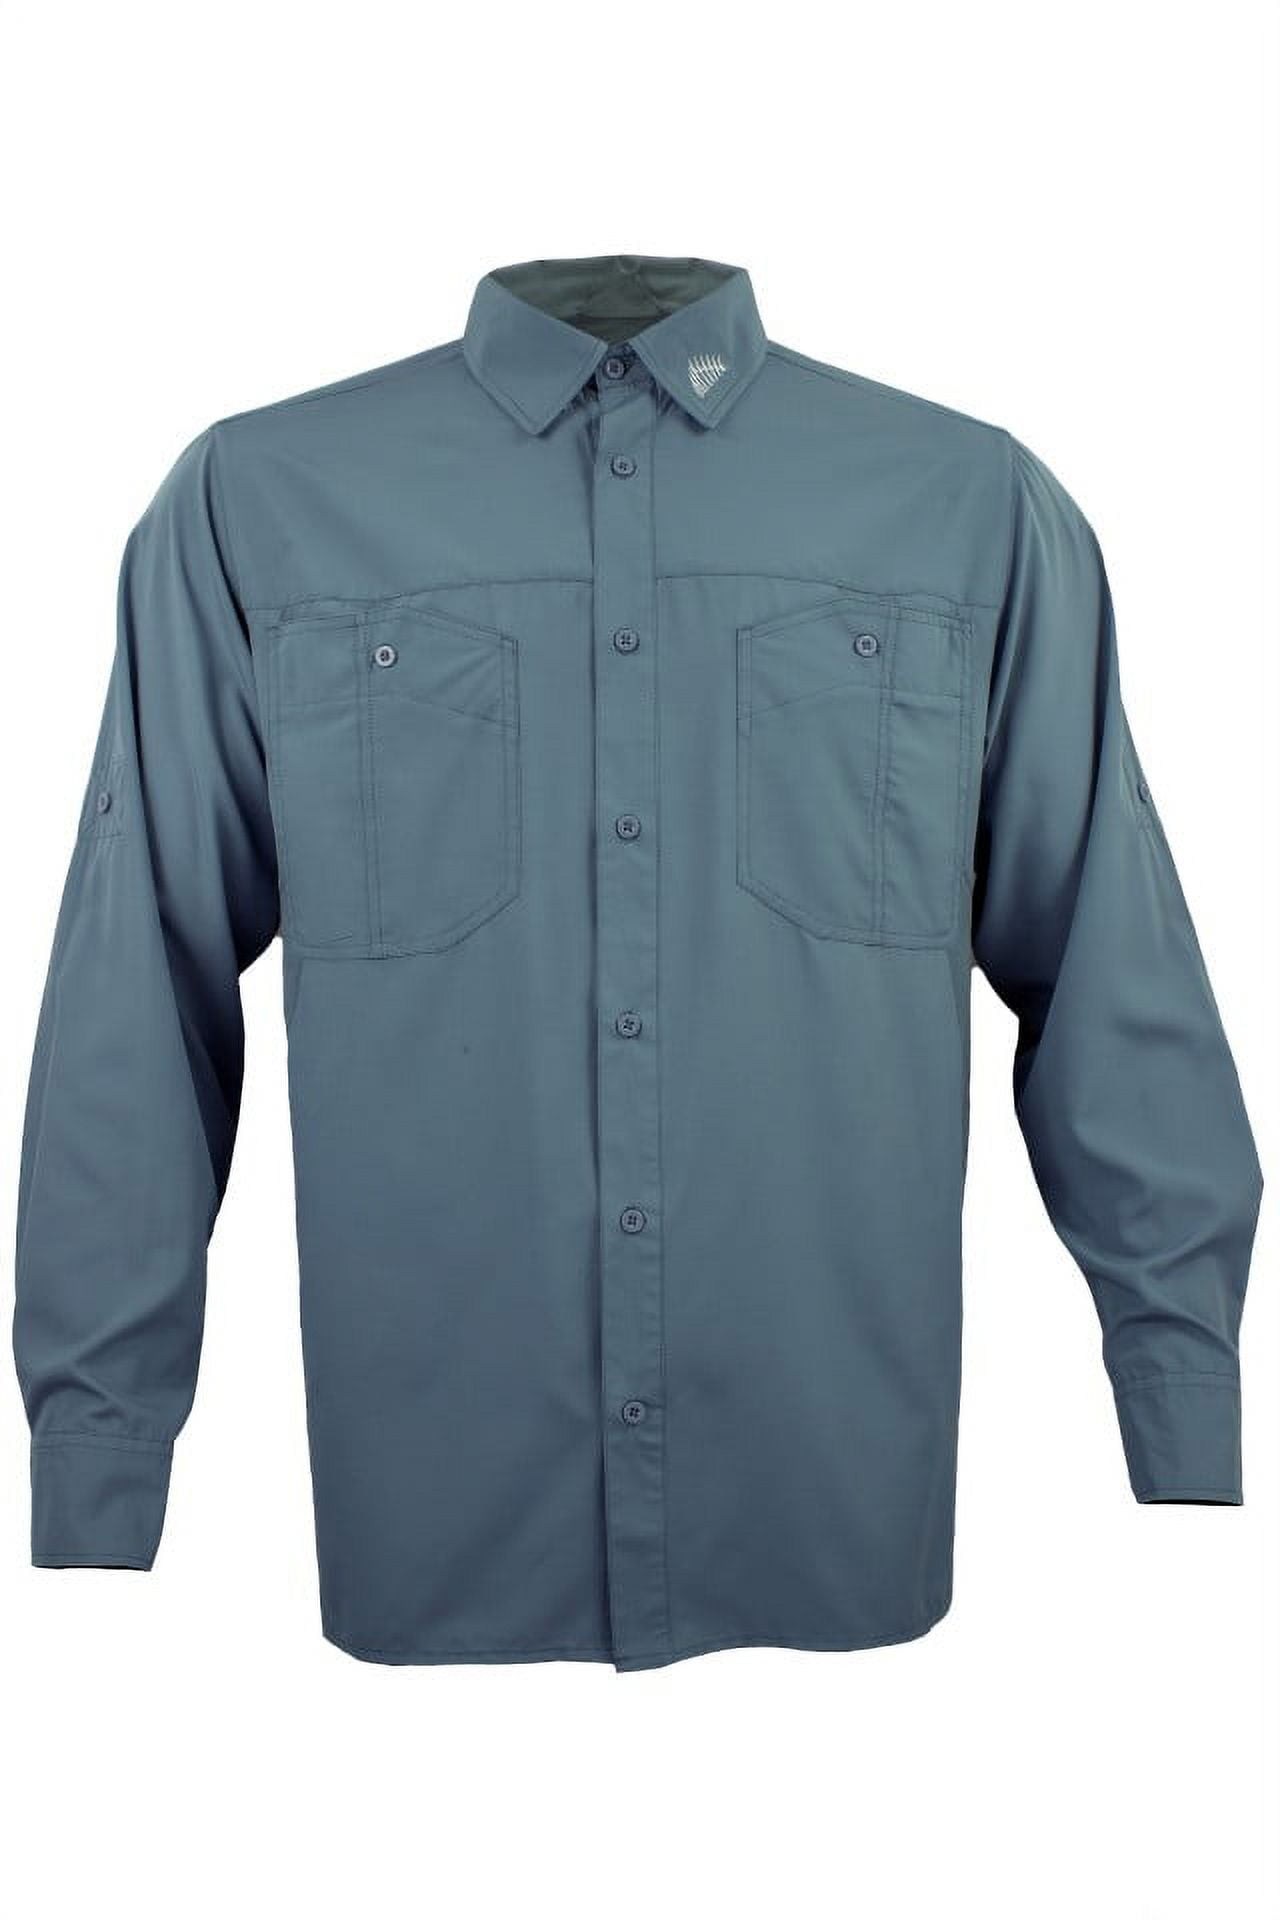 Fintech Long Sleeve Fishing Shirt for Men - Large, Men's, Blue